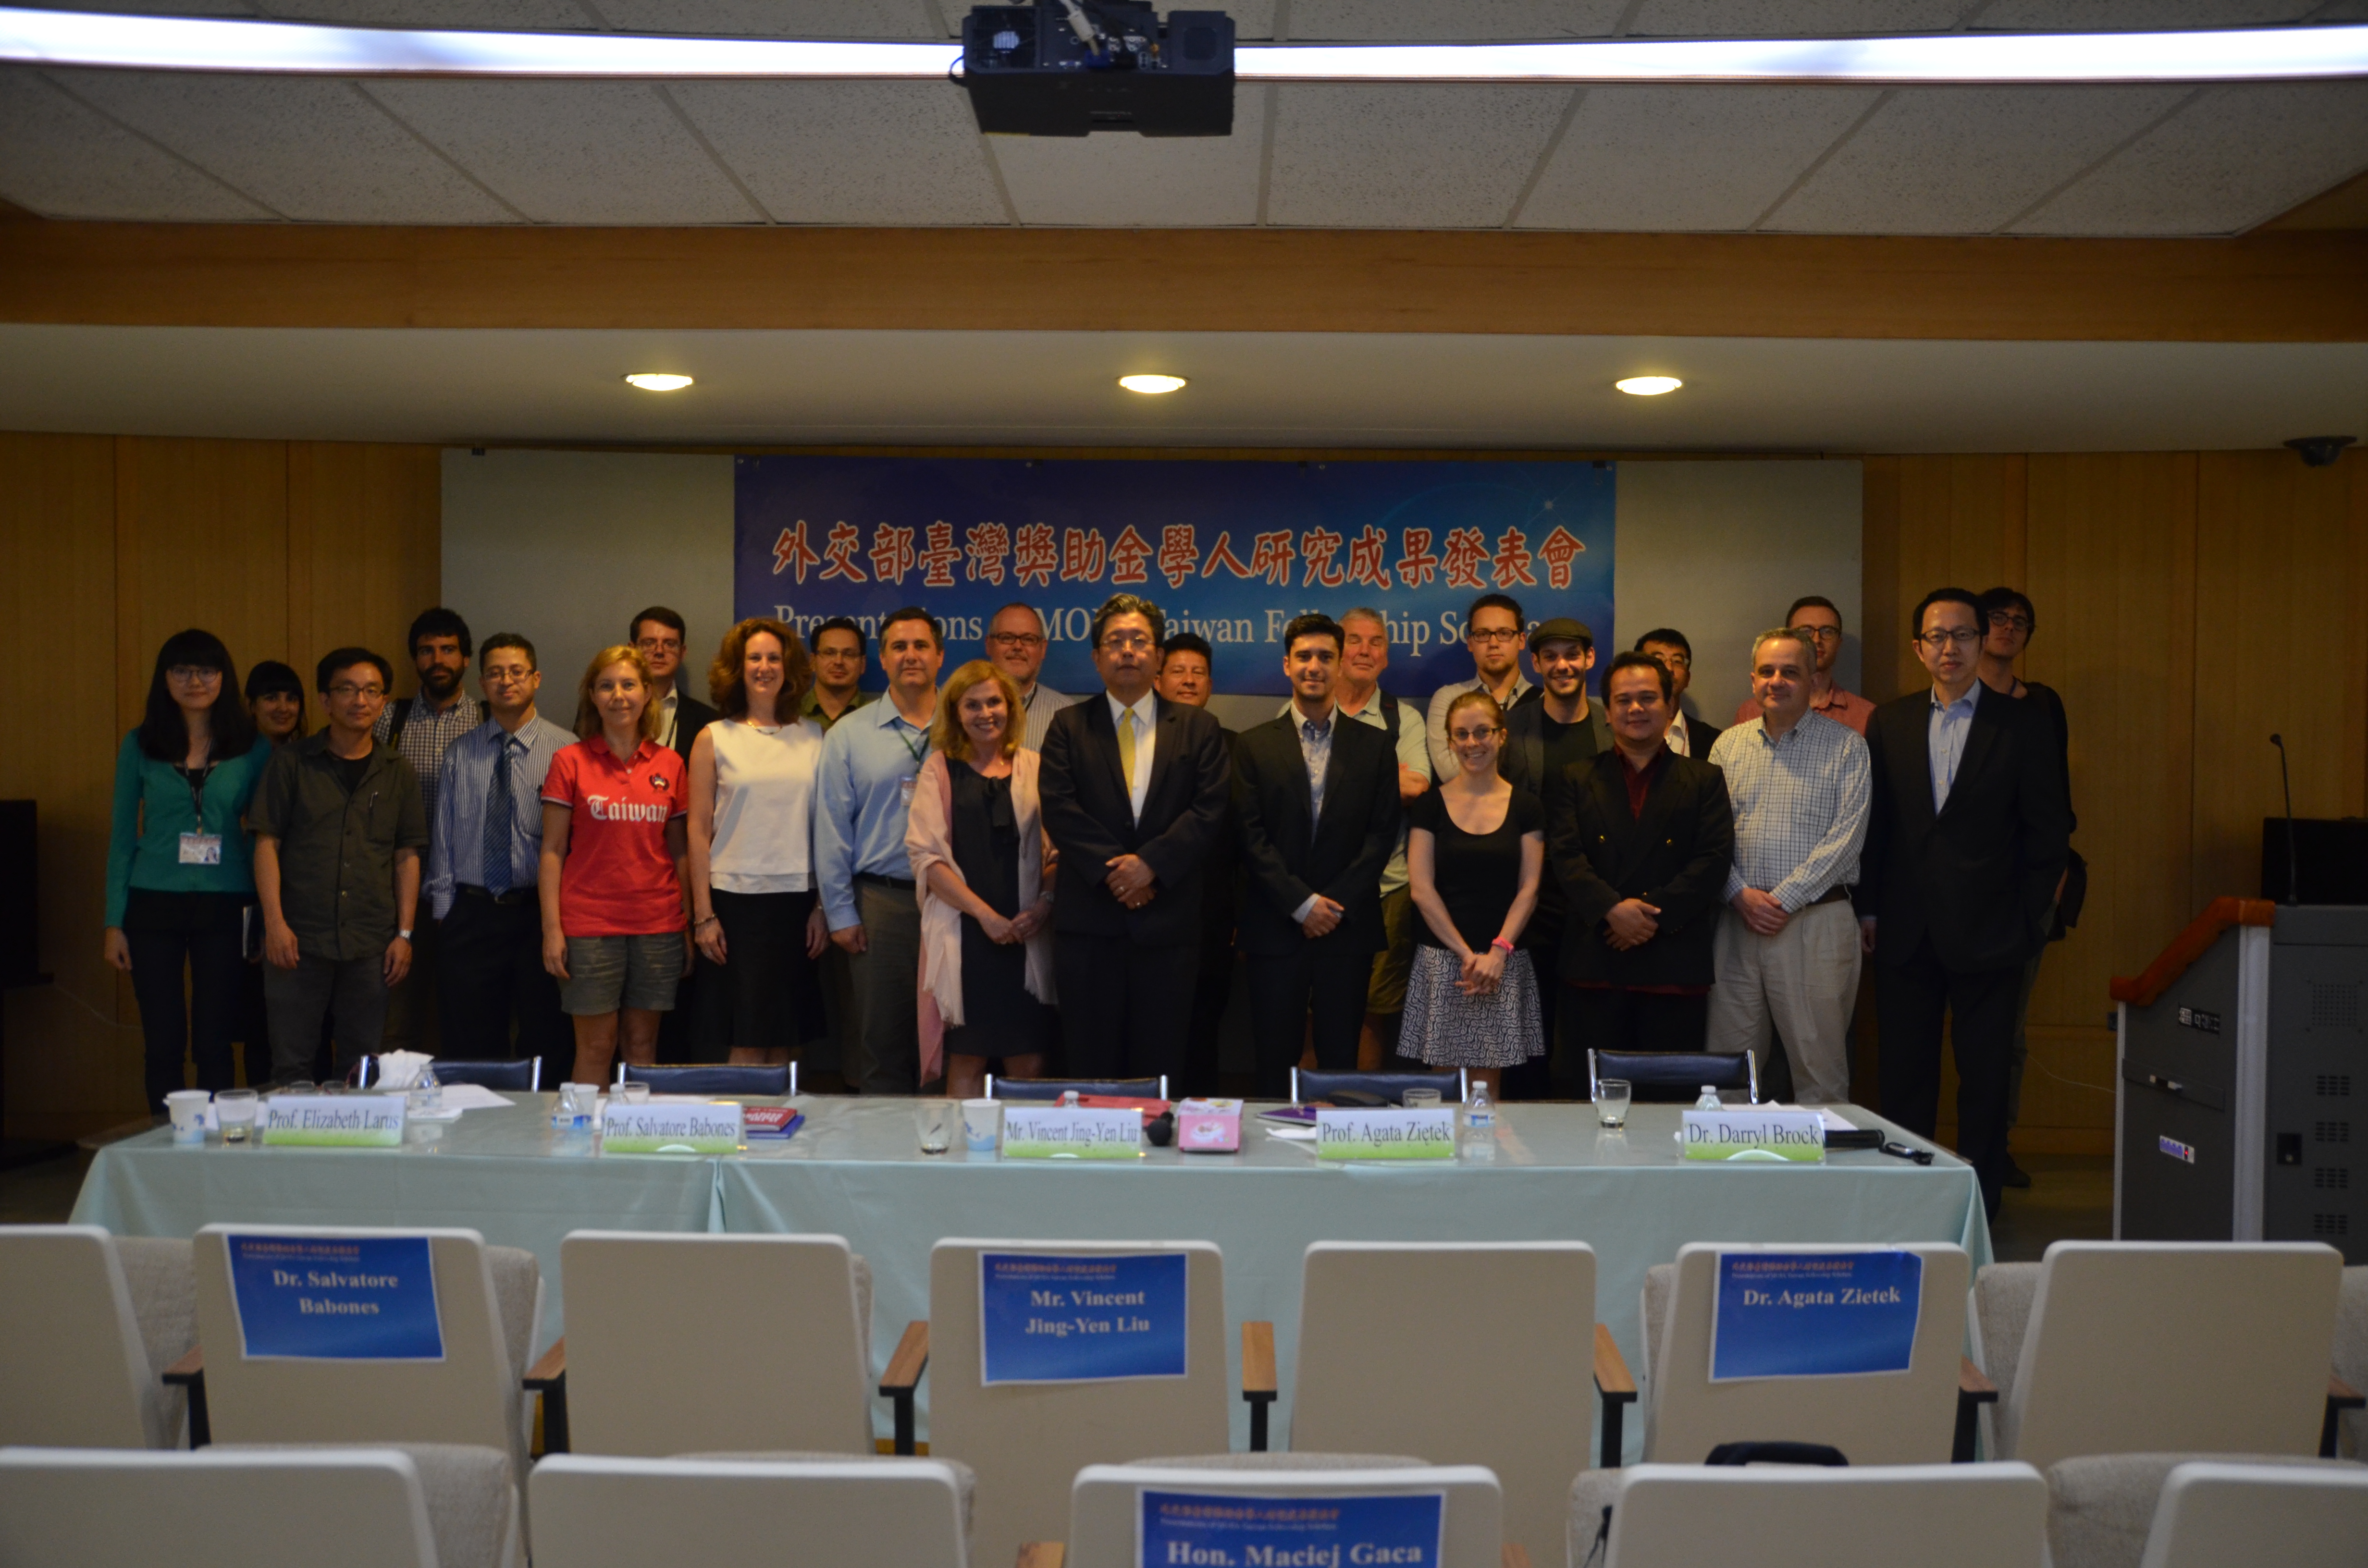 The First Term Presentations of MOFA Taiwan Fellowship Scholars 2015